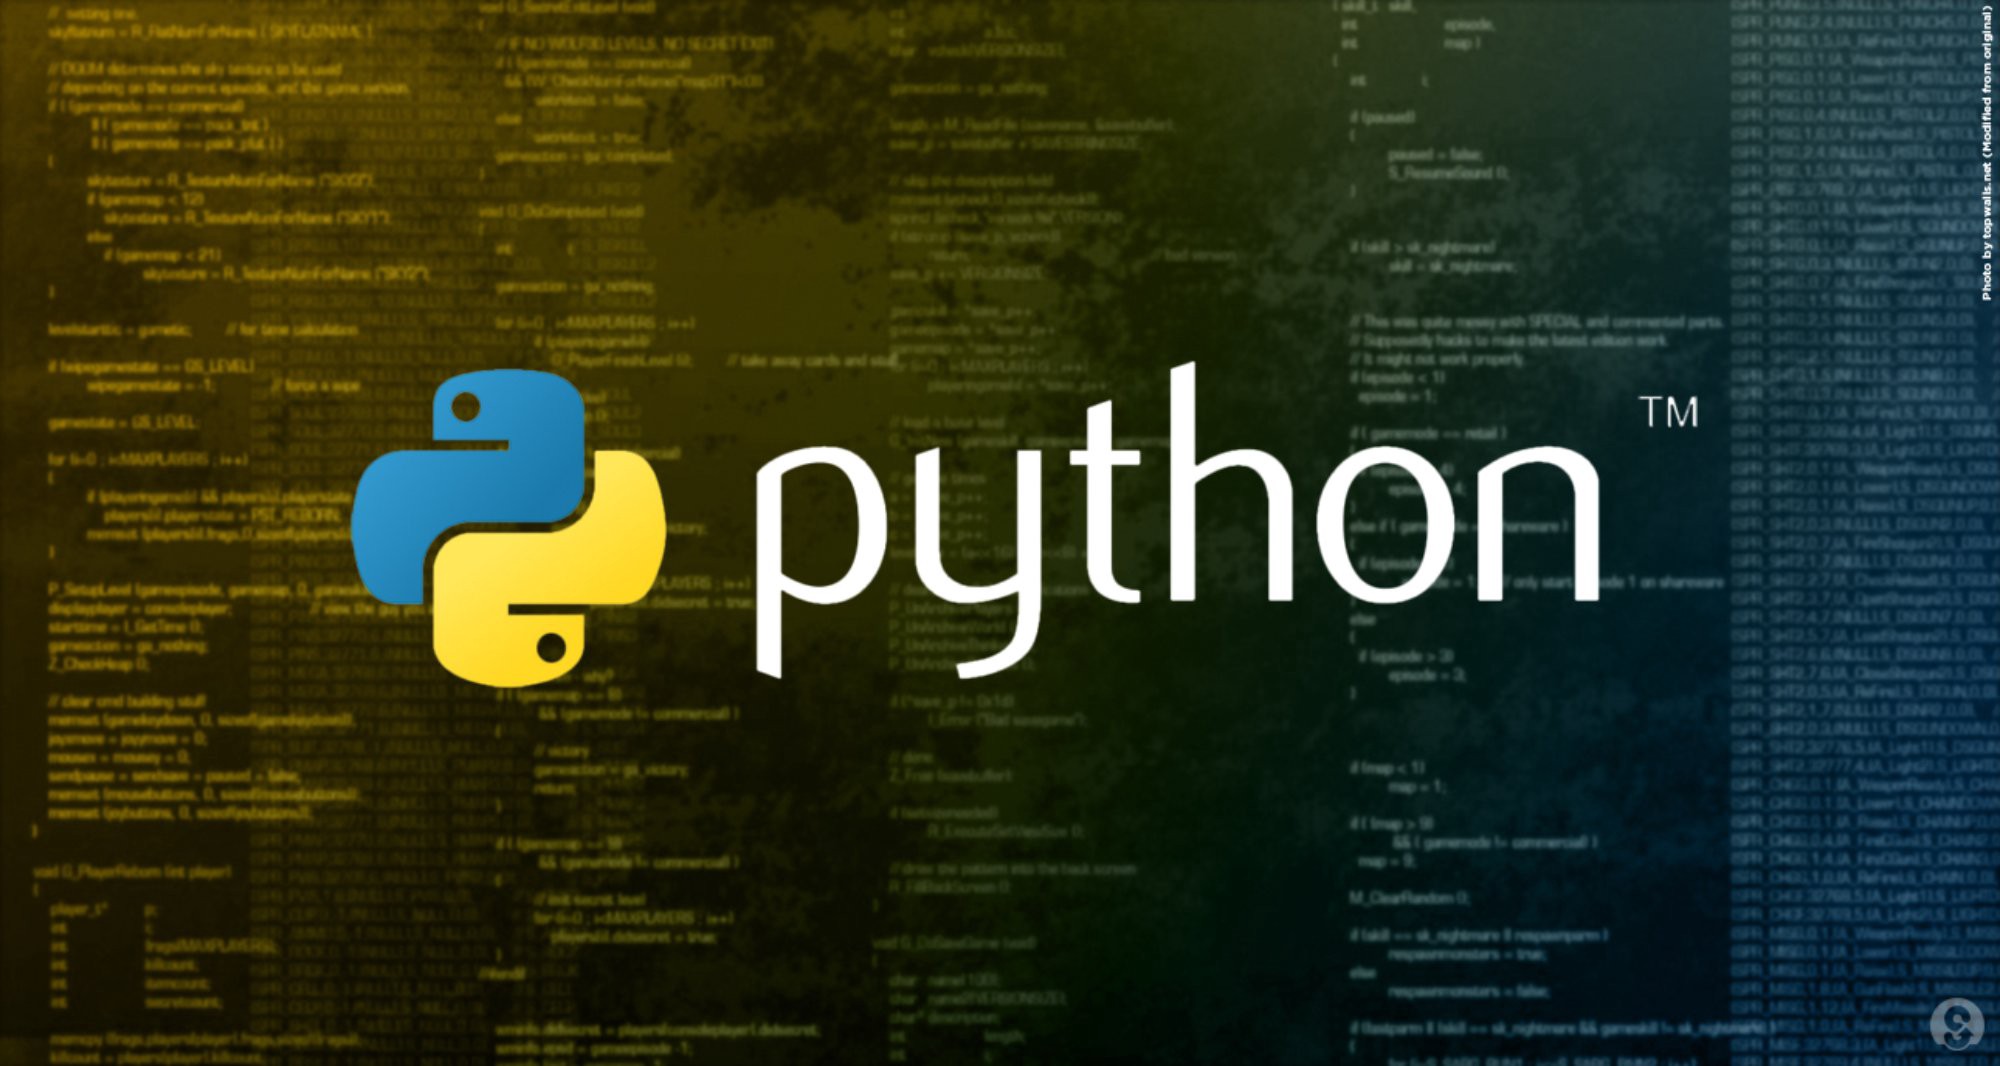 Python Training in Mumbai